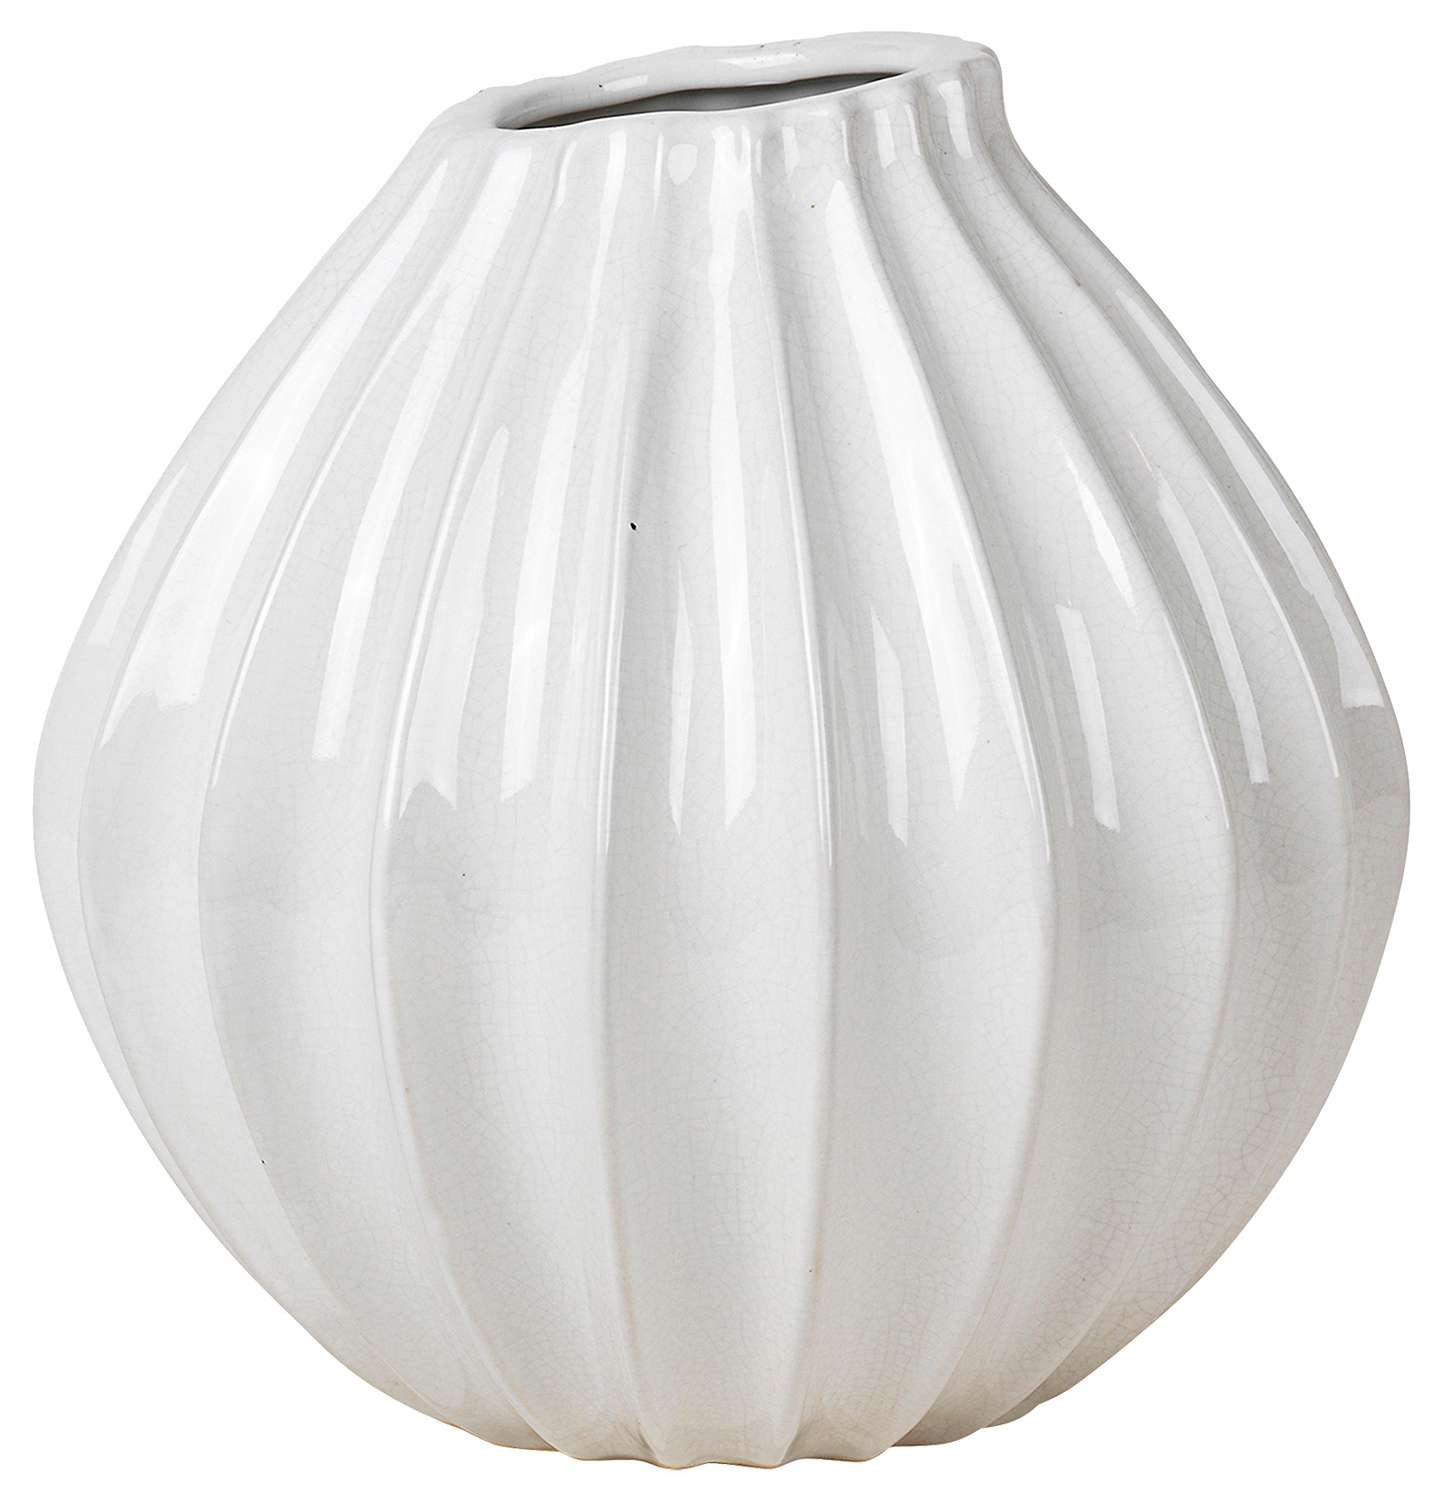 kosta boda crystal vase of broste copenhagen wide vase height 25 cm scandinavian lifestyle with 5710688149643 bilder 1280x12802x